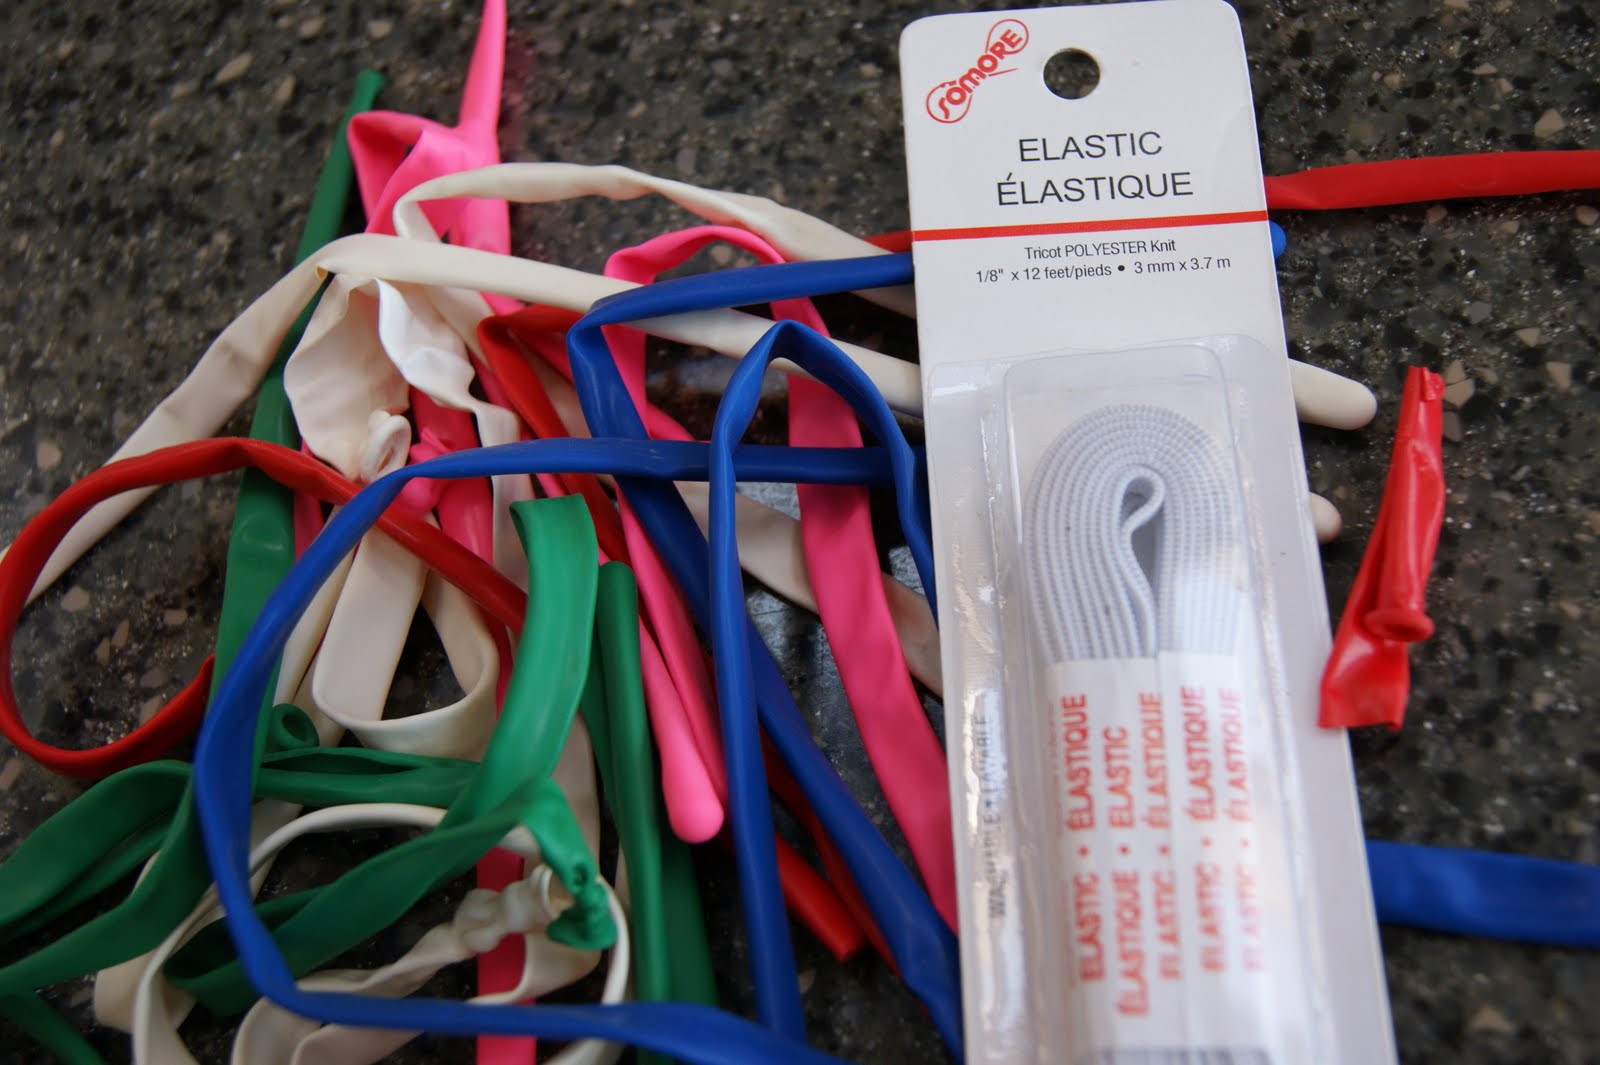 michelle paige blogs: Make Your Own Balloon Bracelets